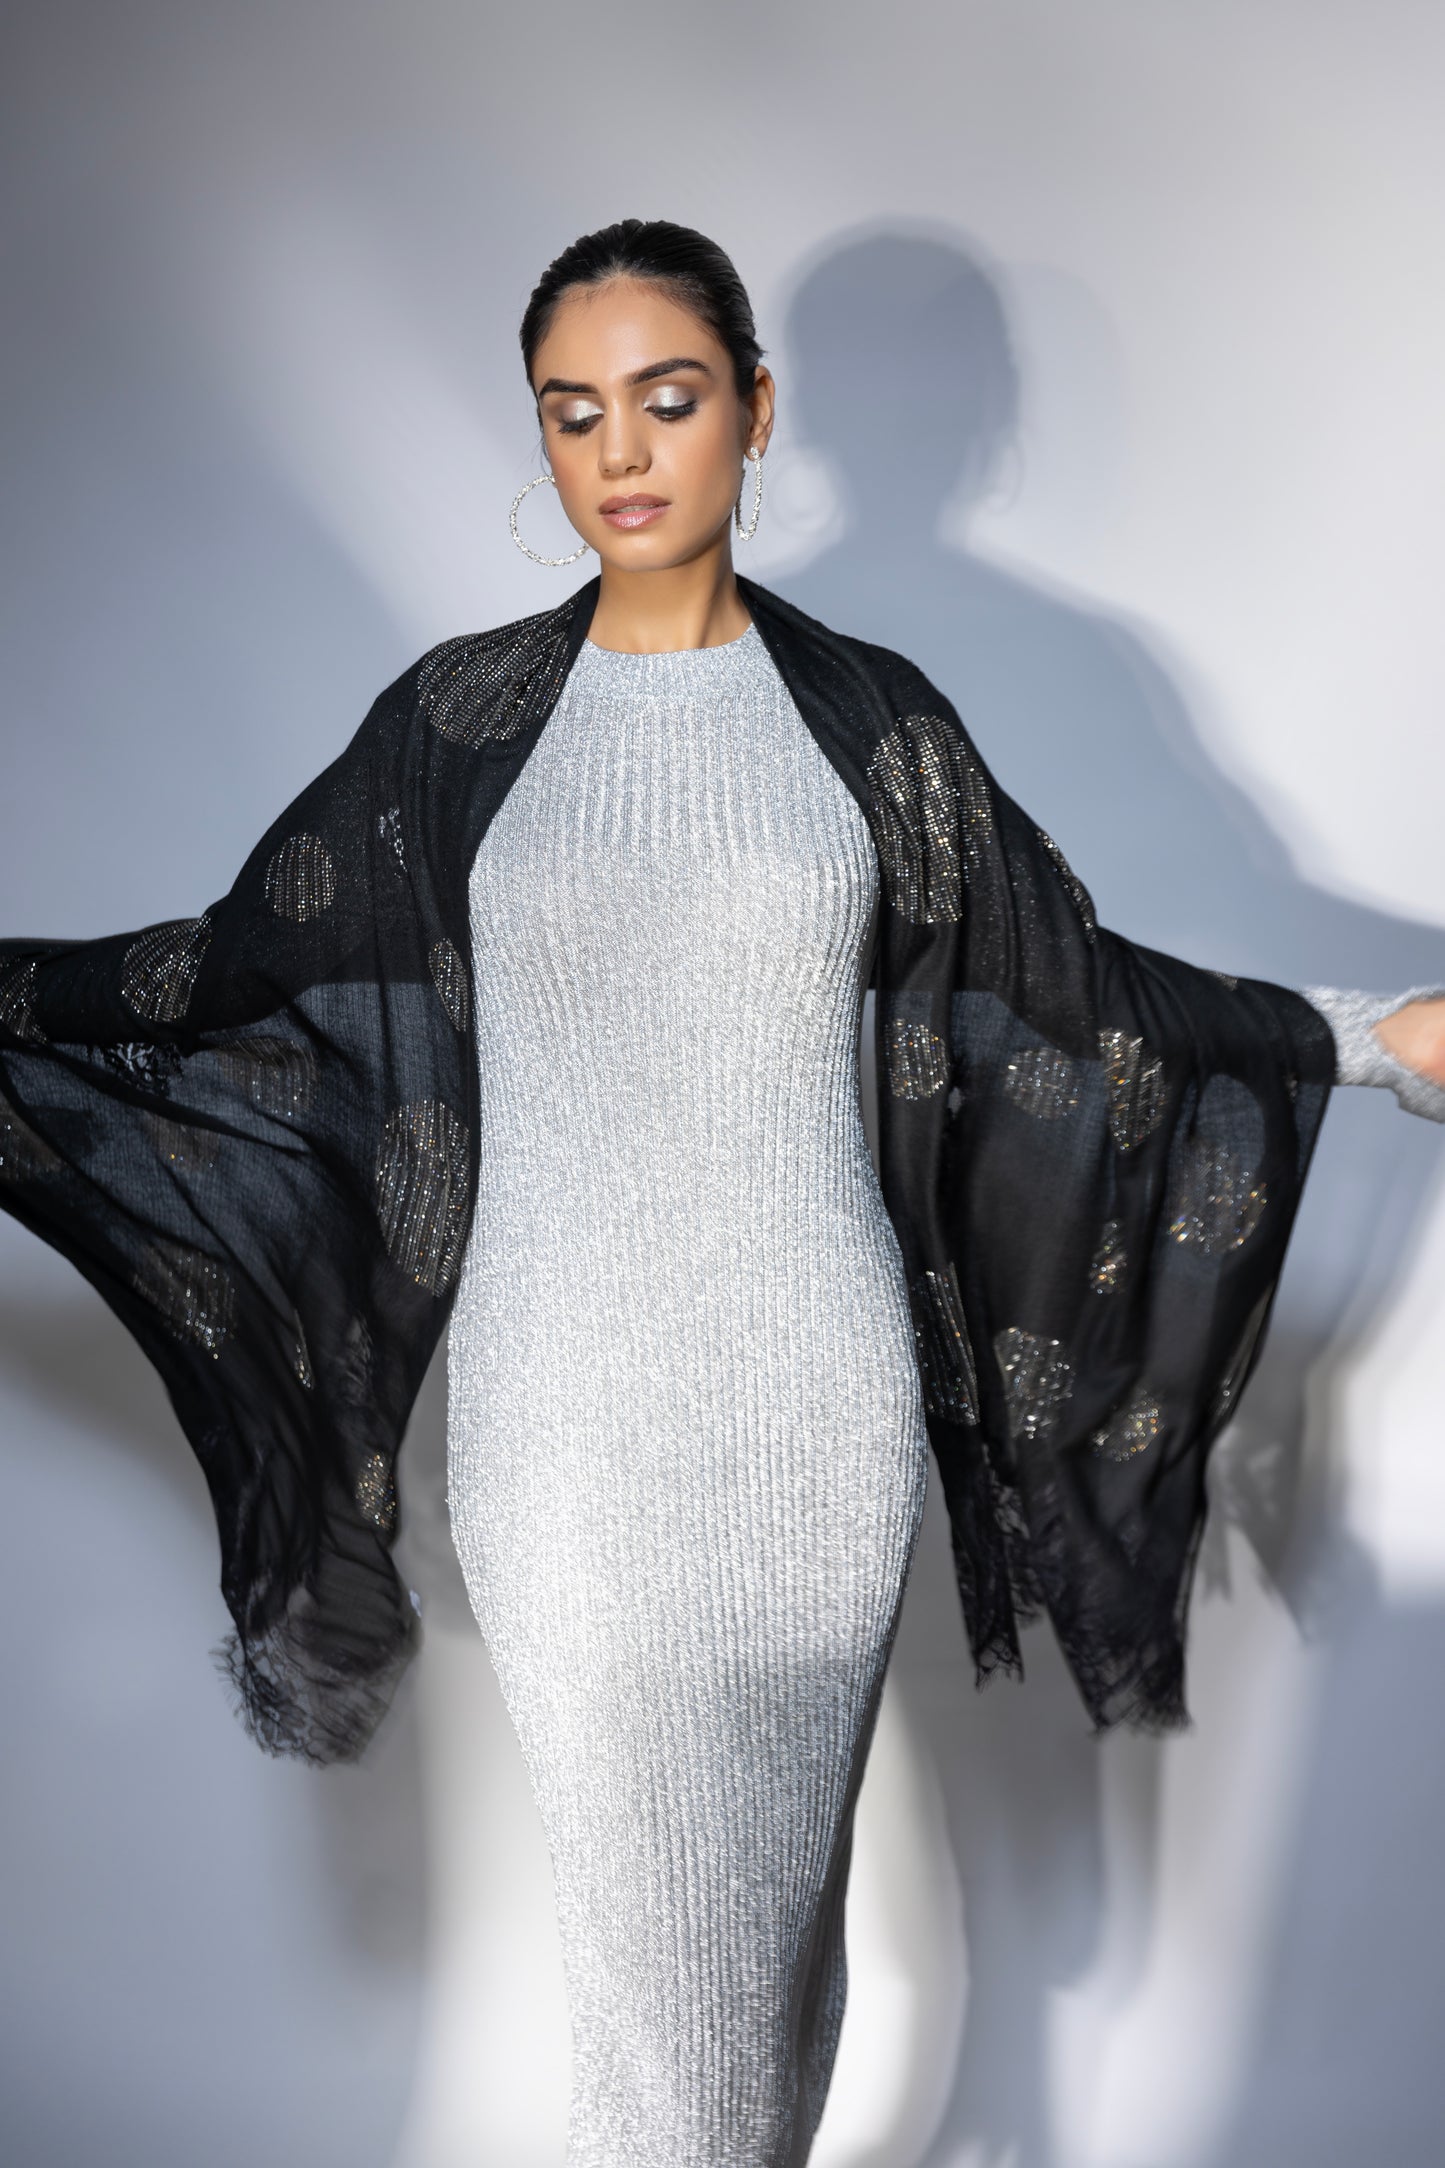 Black shawl with Swarovski Design and Lace